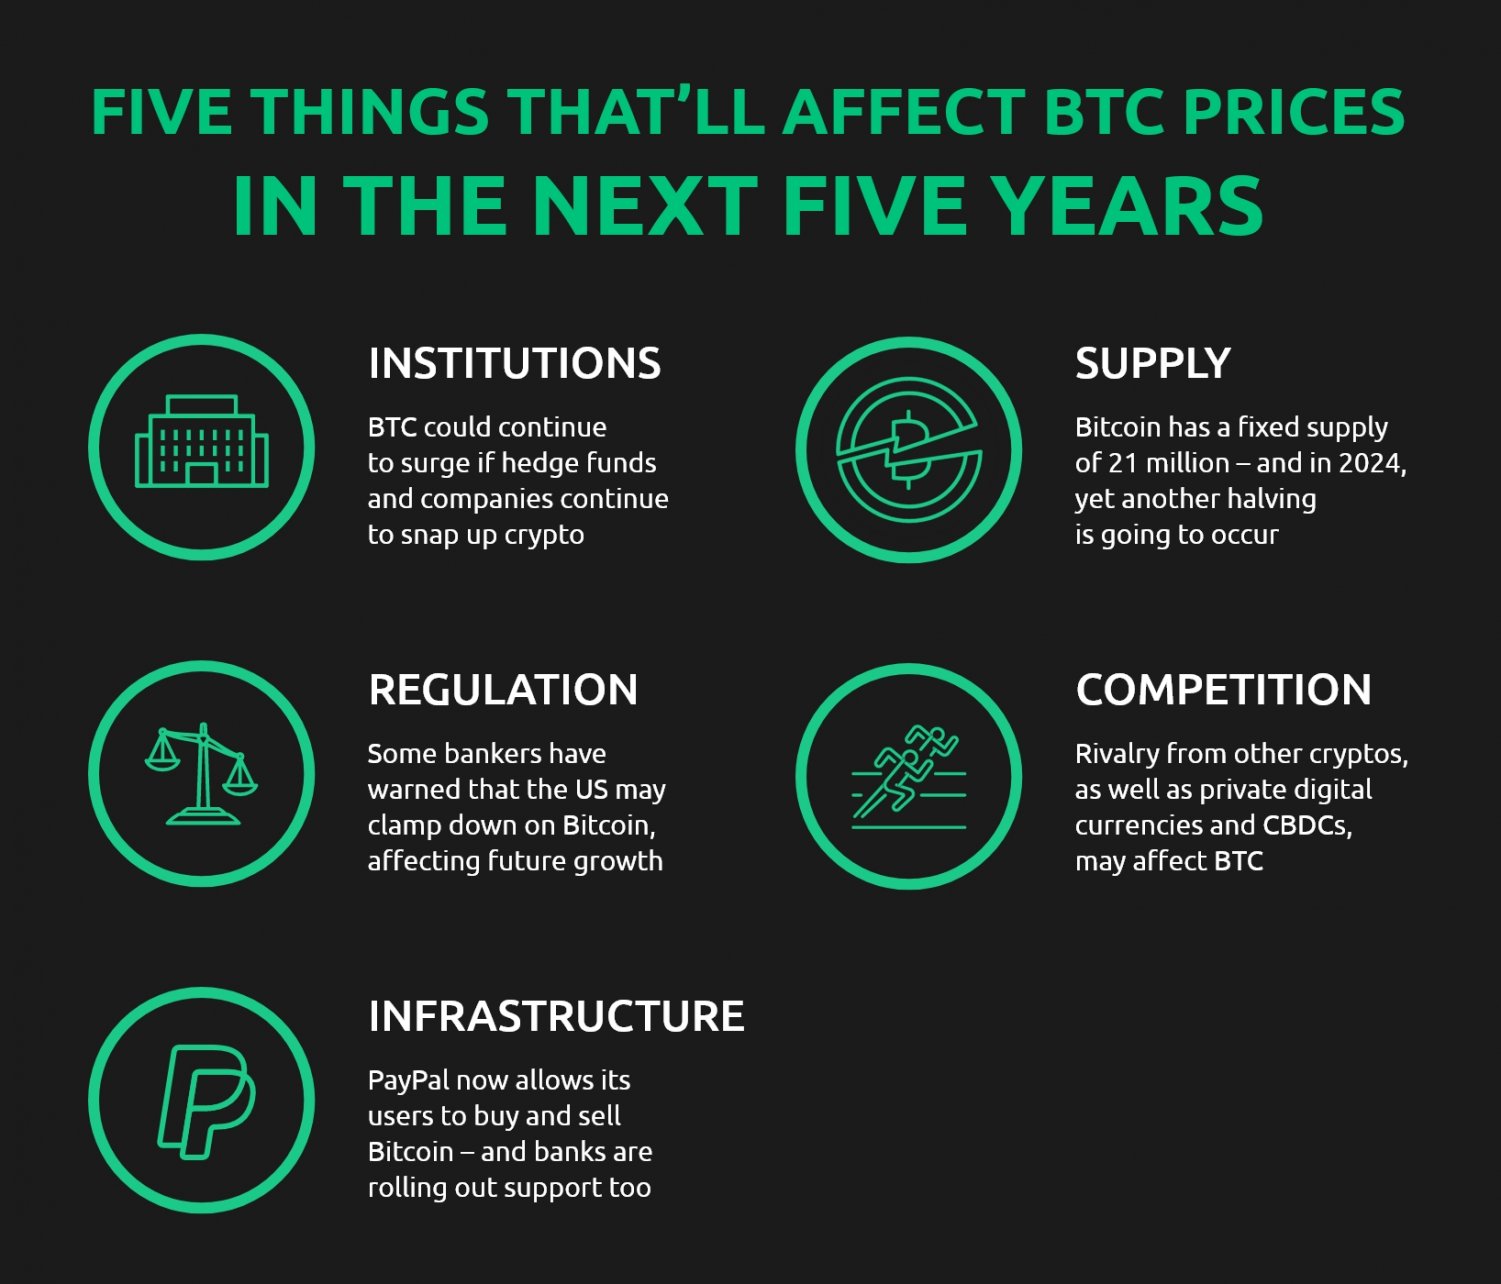 bico crypto price prediction 2025